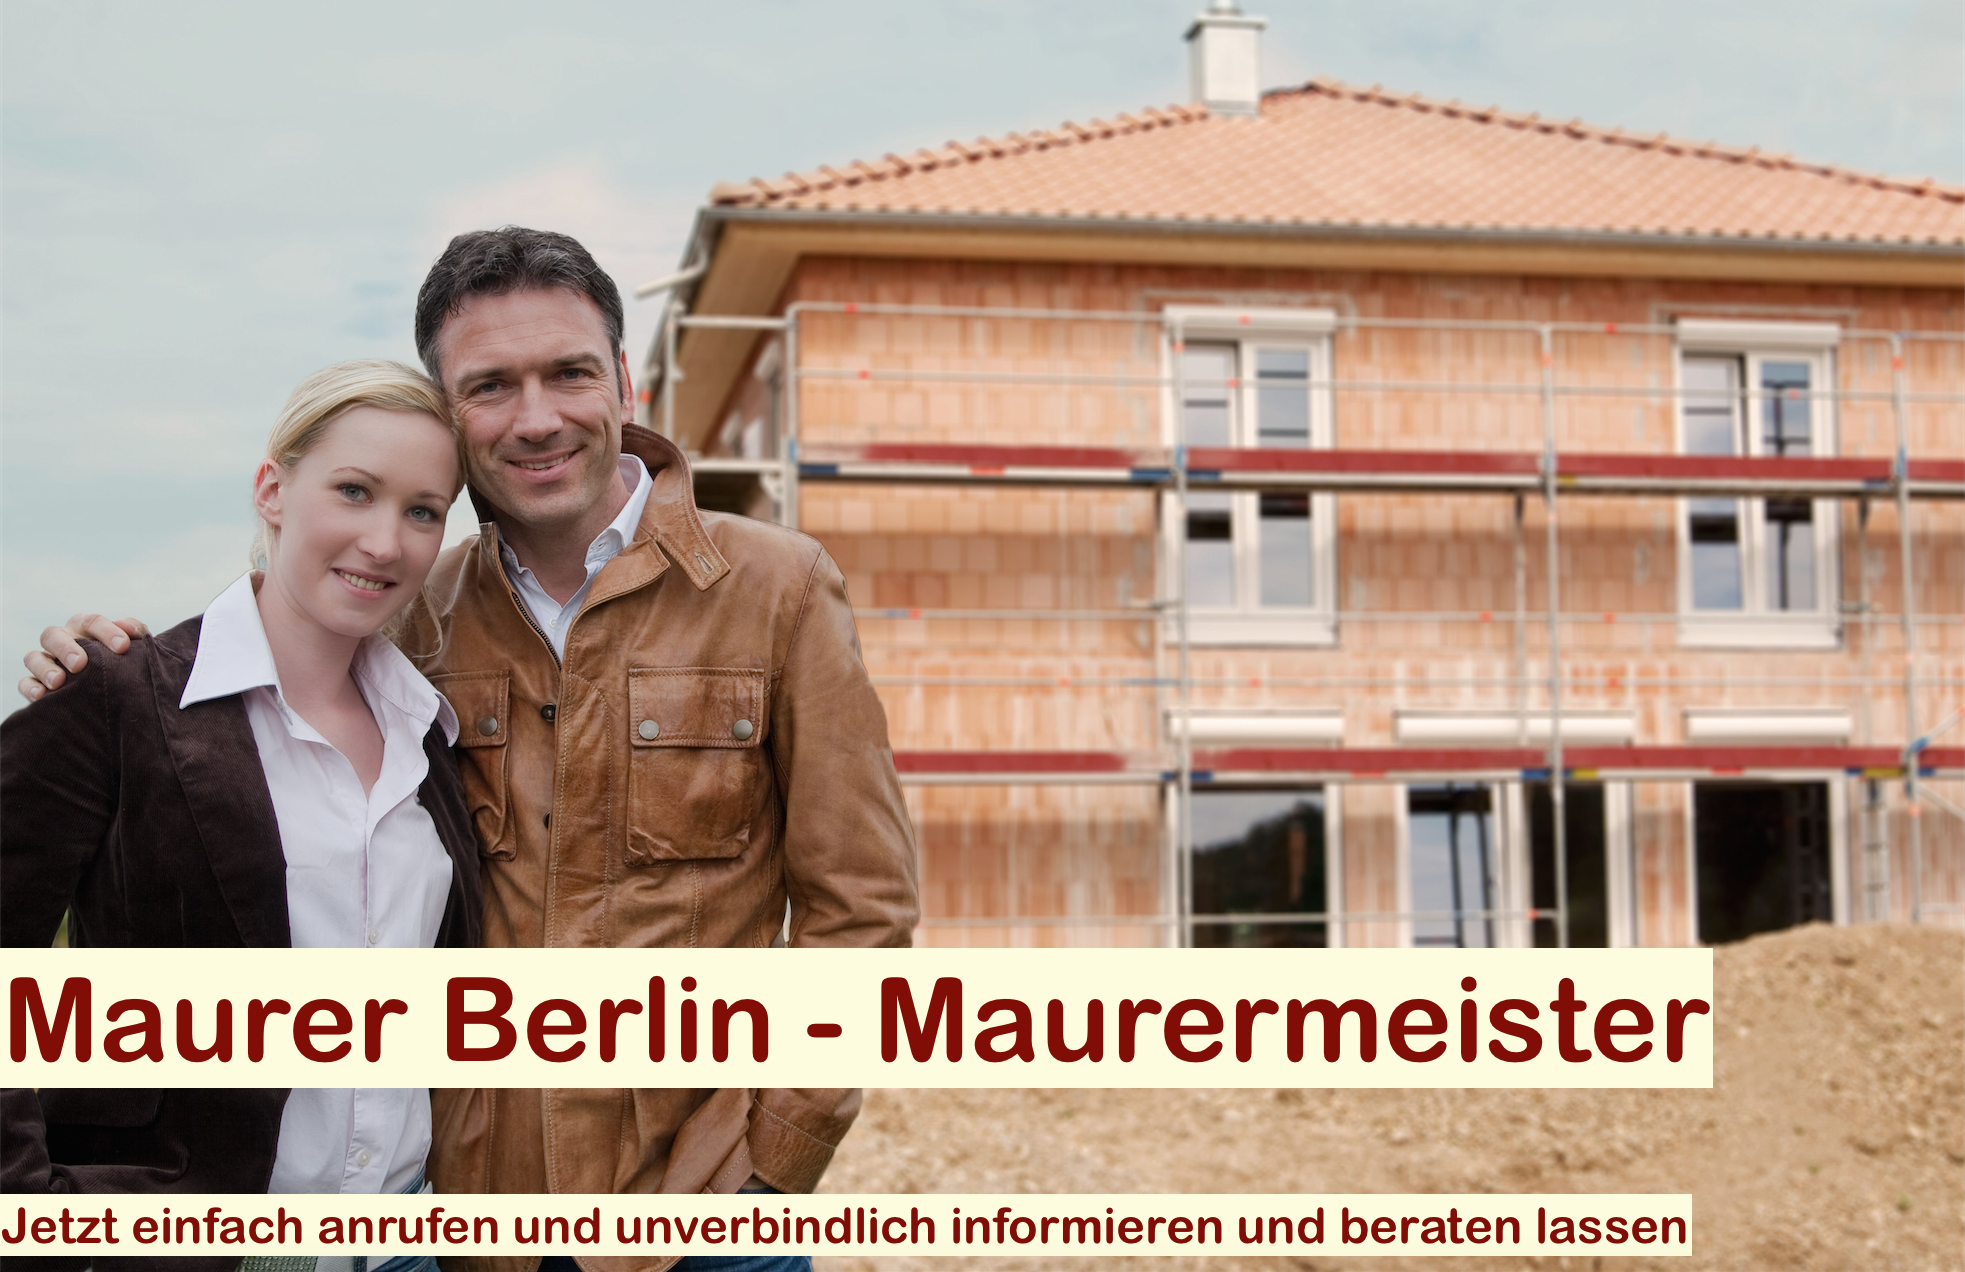 Maurermeister Berlin - Maurerarbeiten